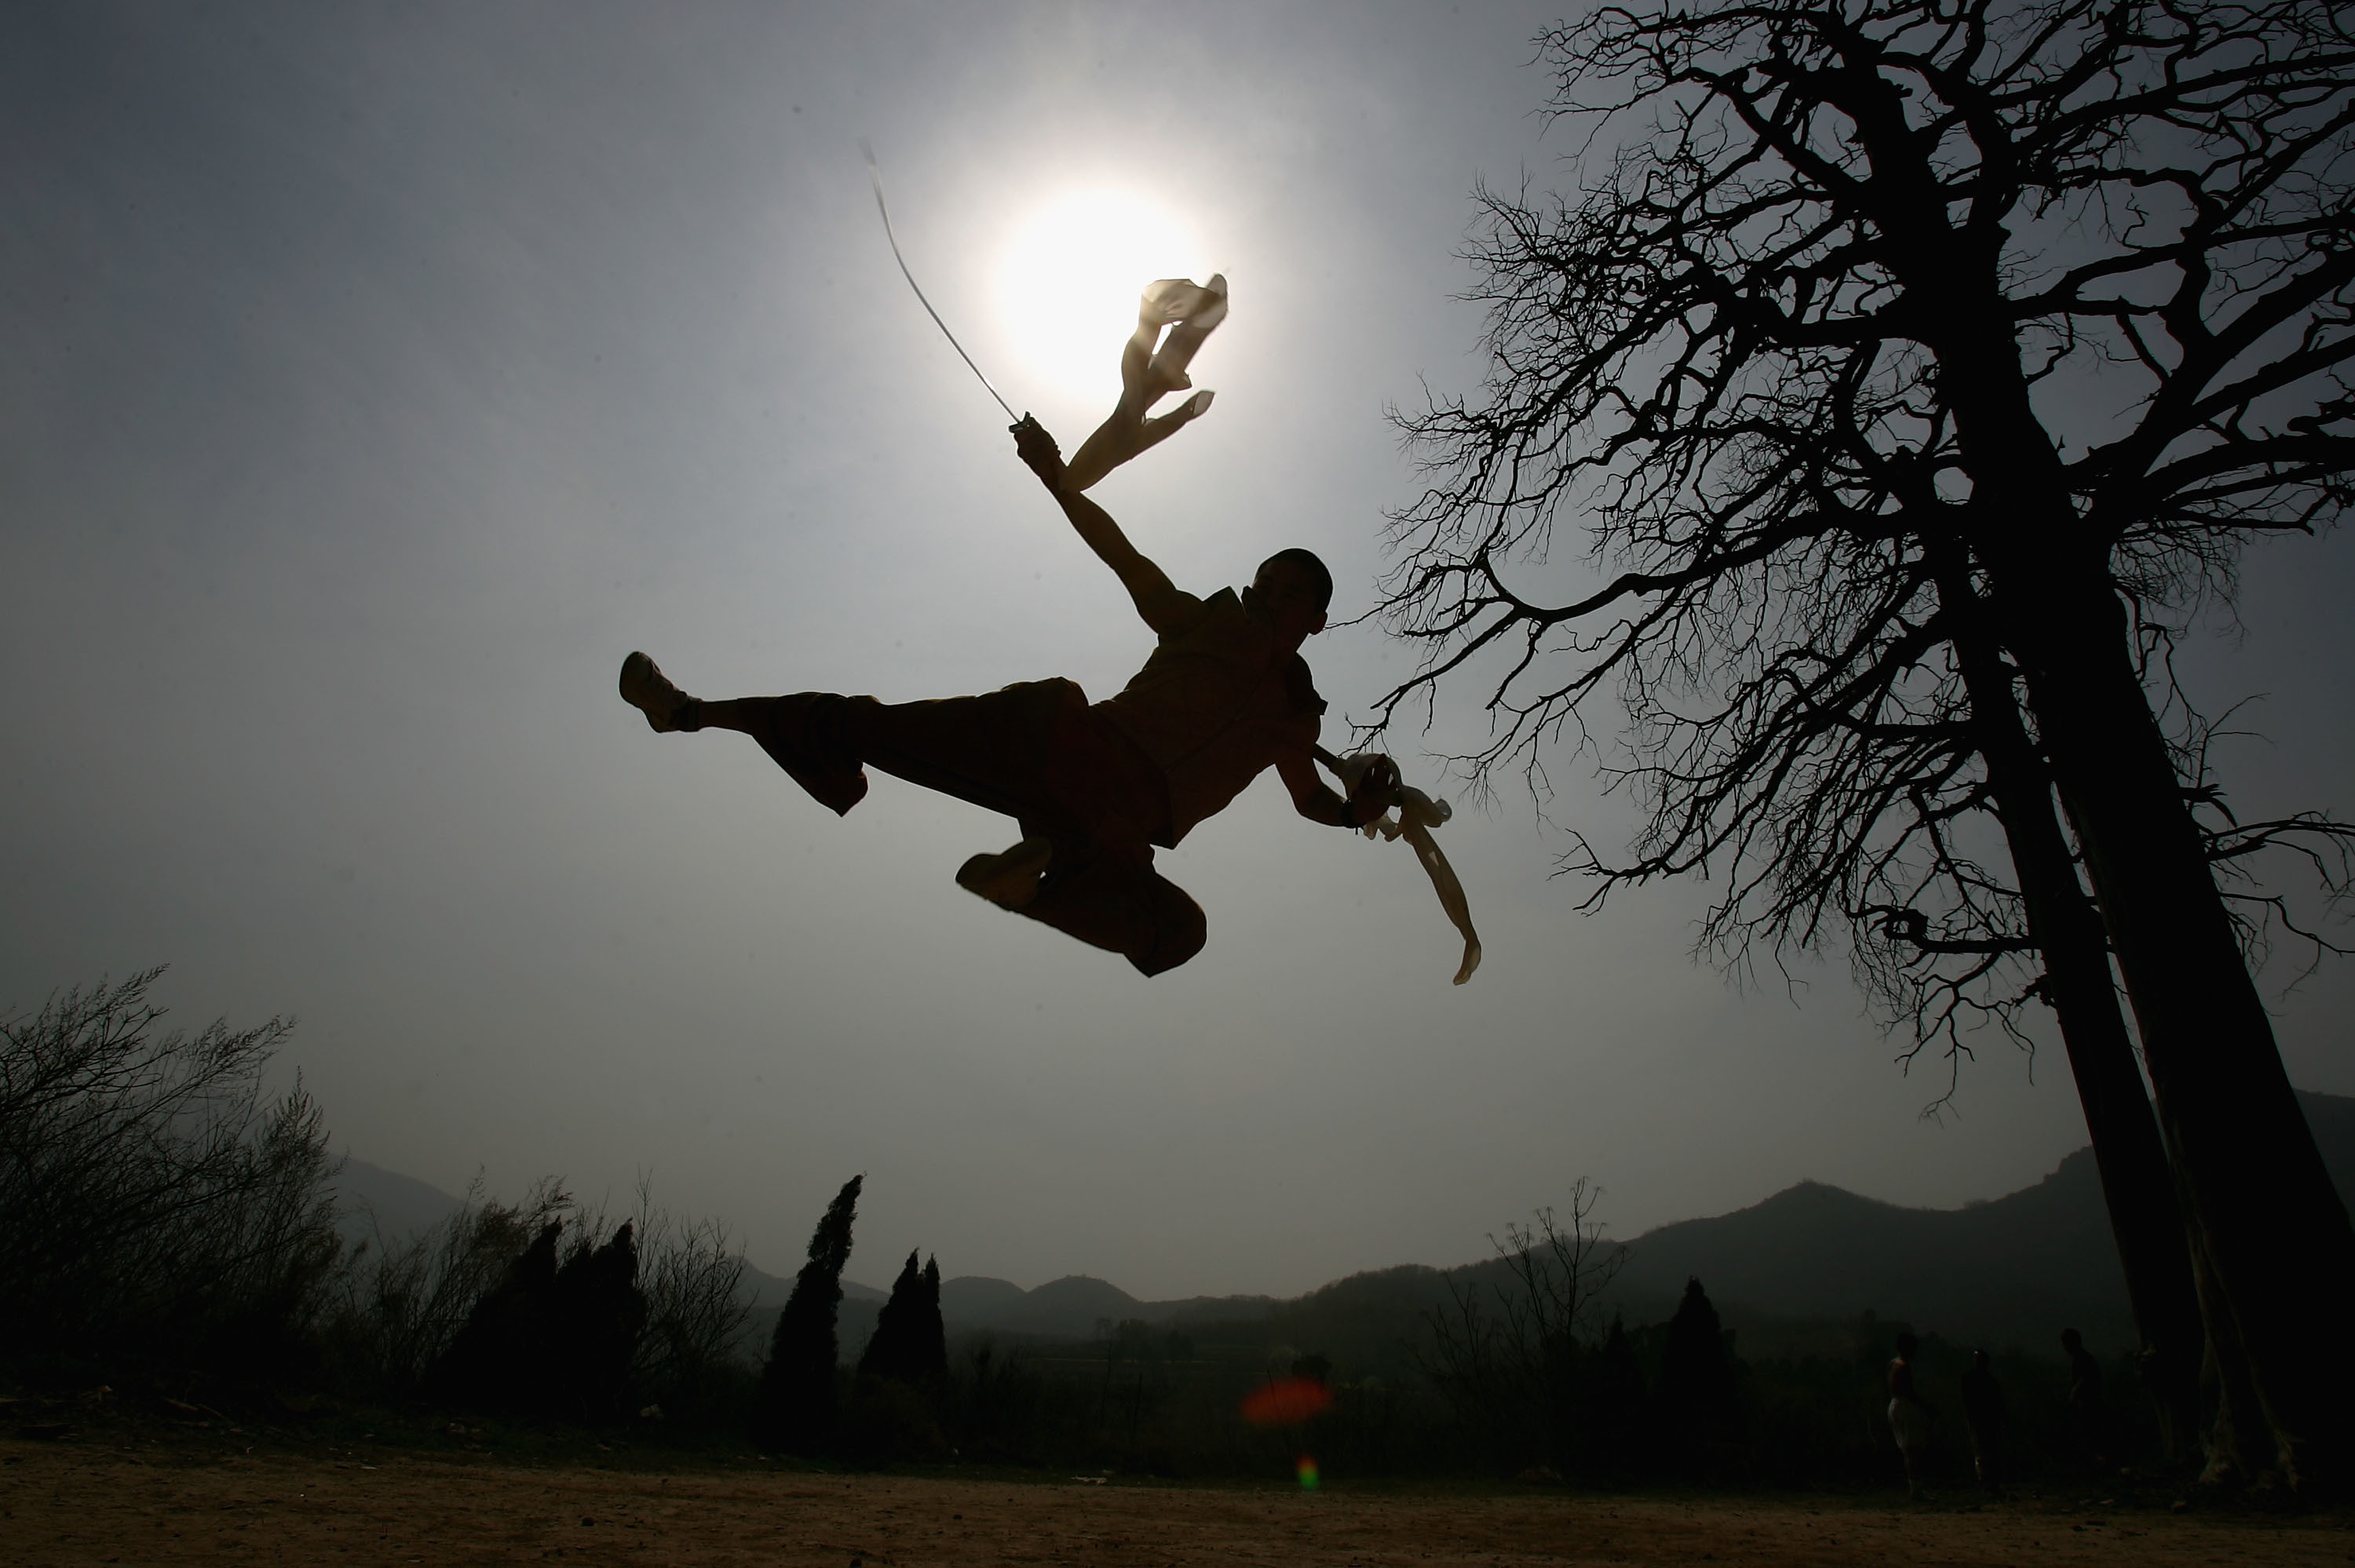 kung fu wallpaper hd,jumping,sky,happy,tree,flip (acrobatic)